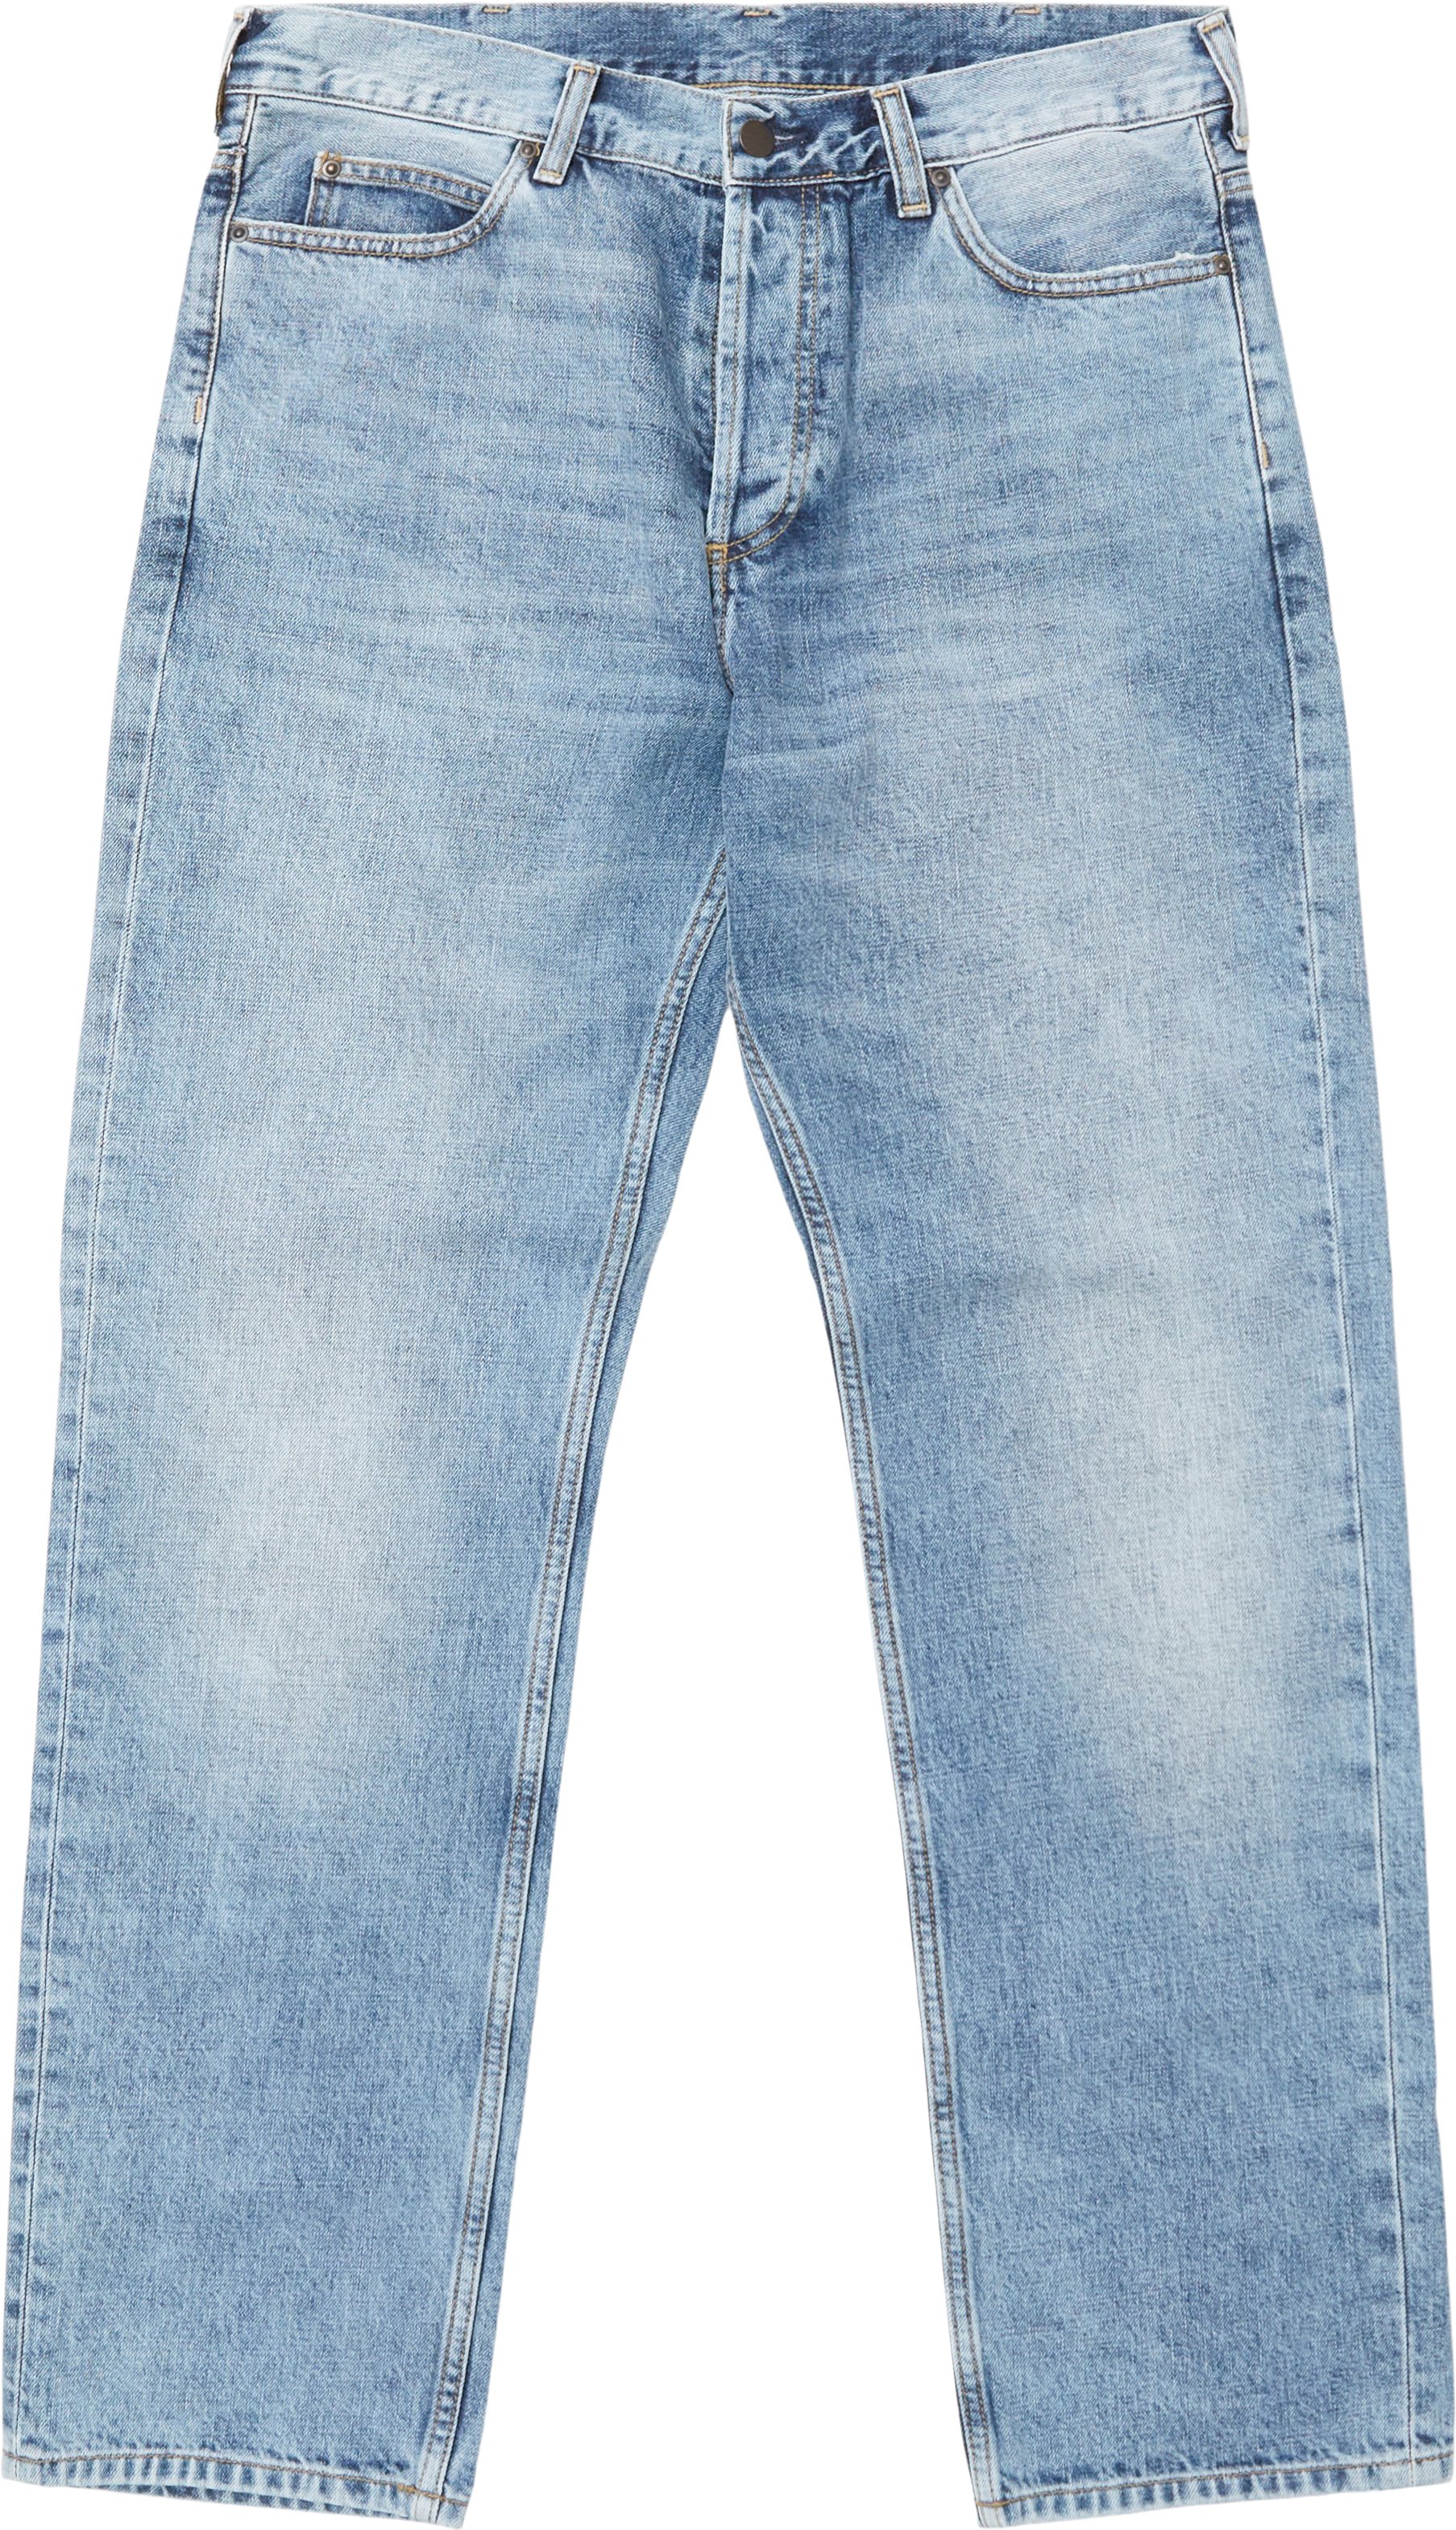 Marlow Jeans - Jeans - Regular fit - Denim